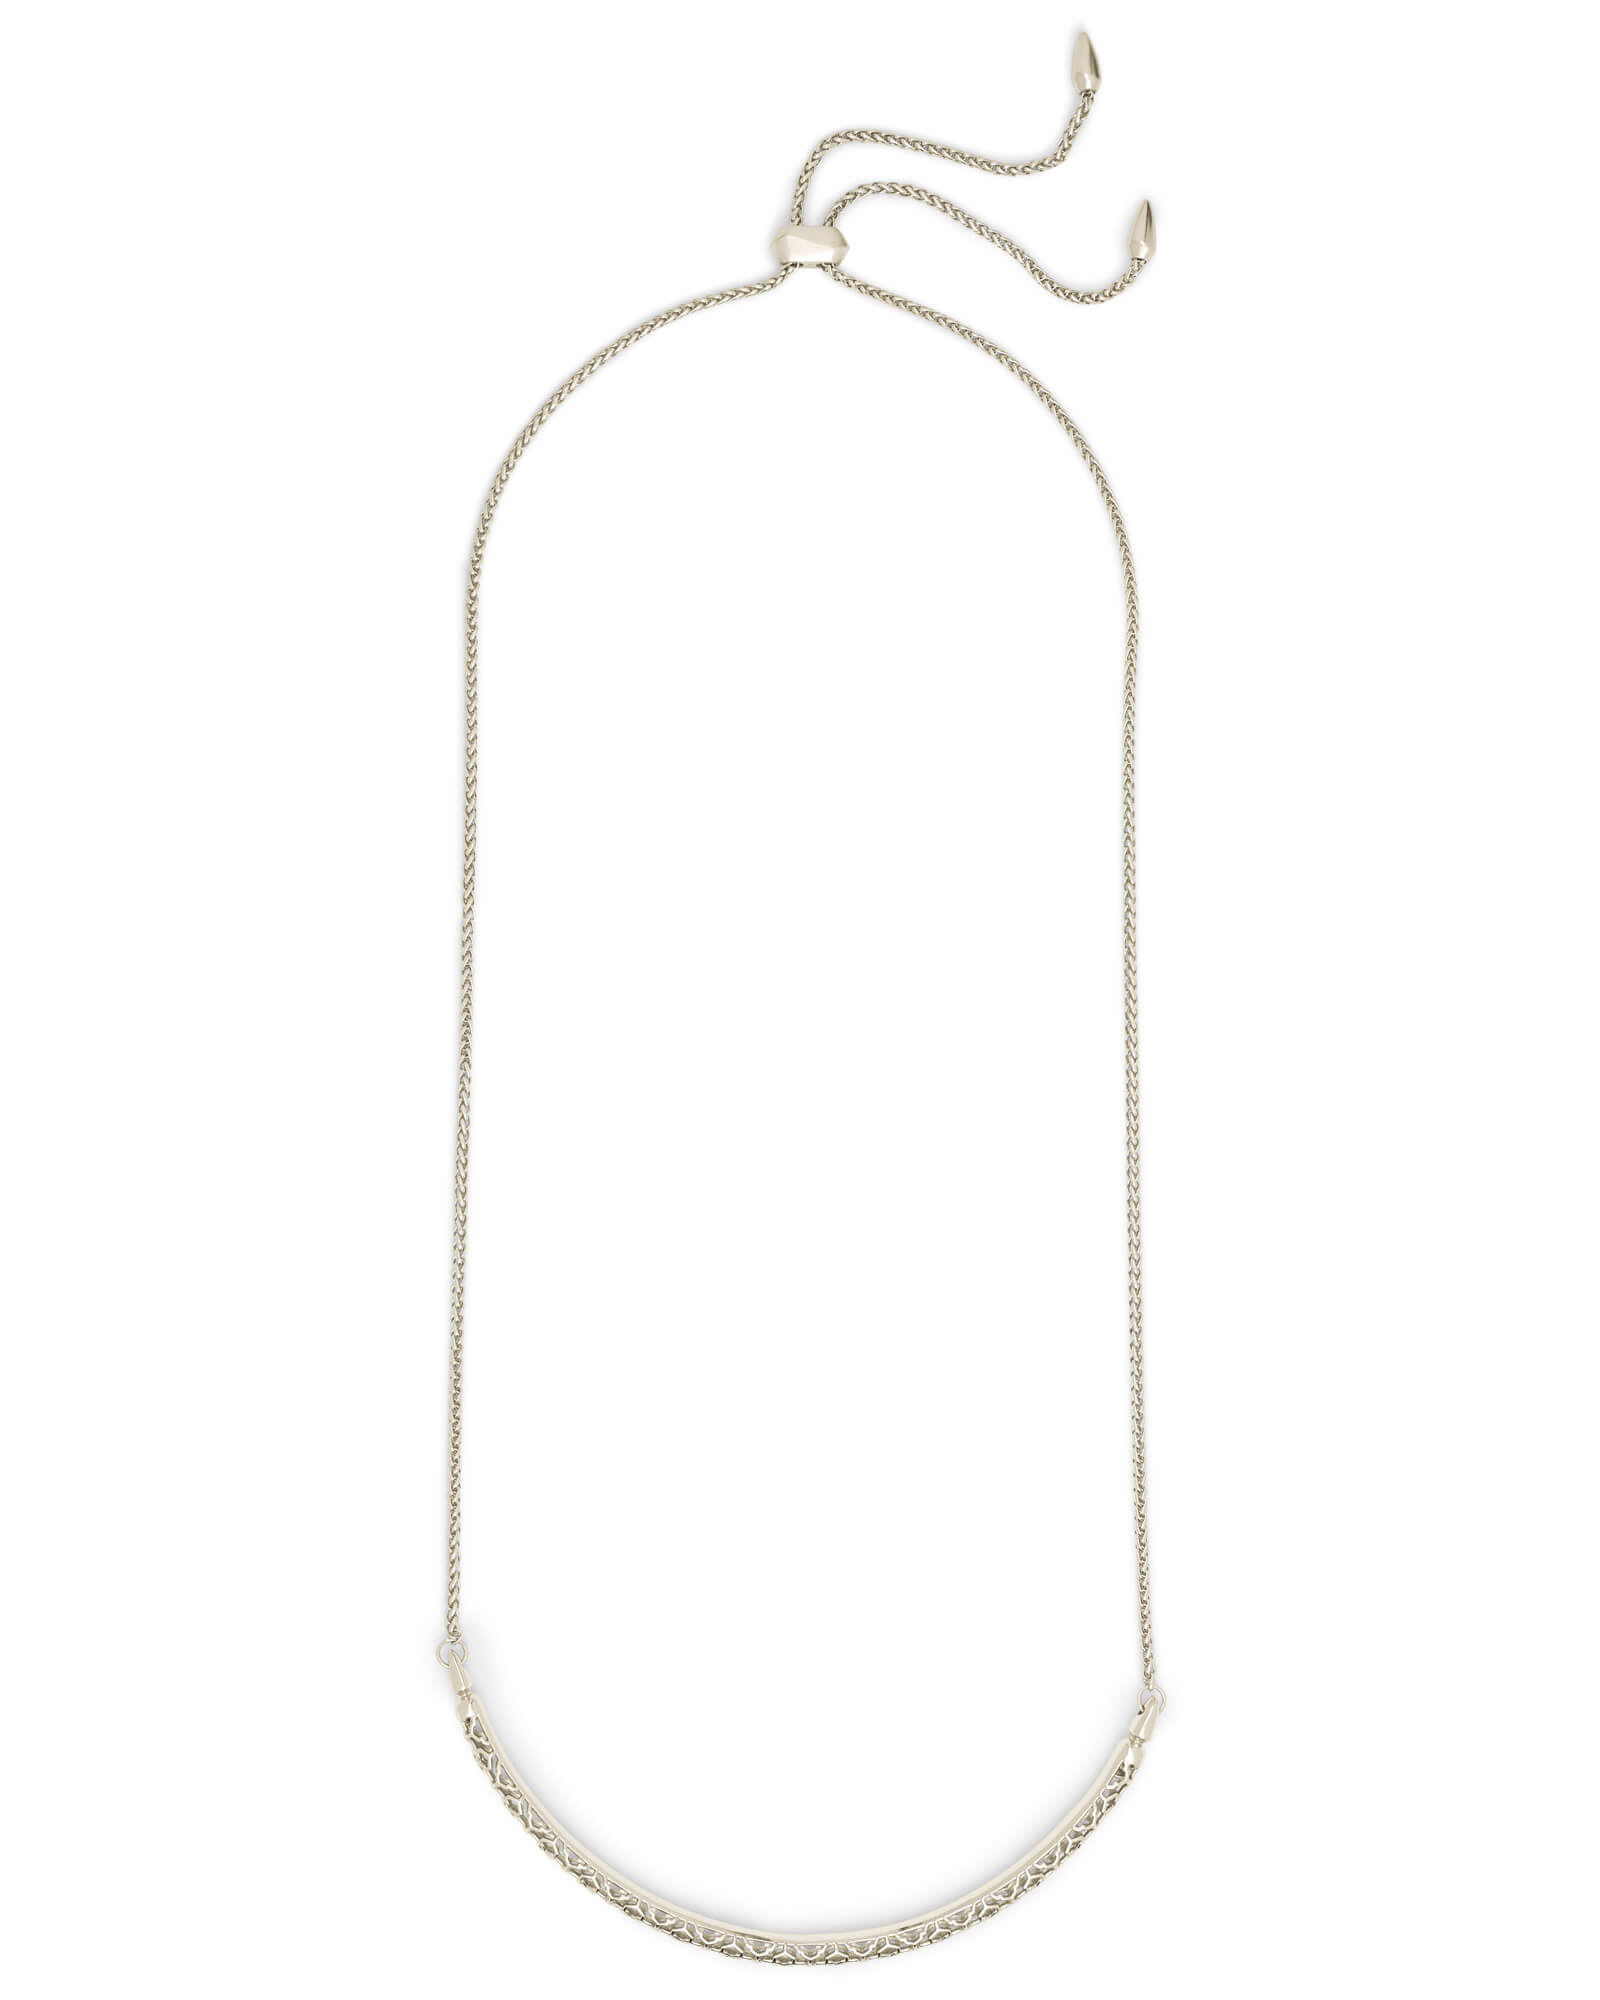 Goldie Choker Necklace in Silver Filigree | Kendra Scott